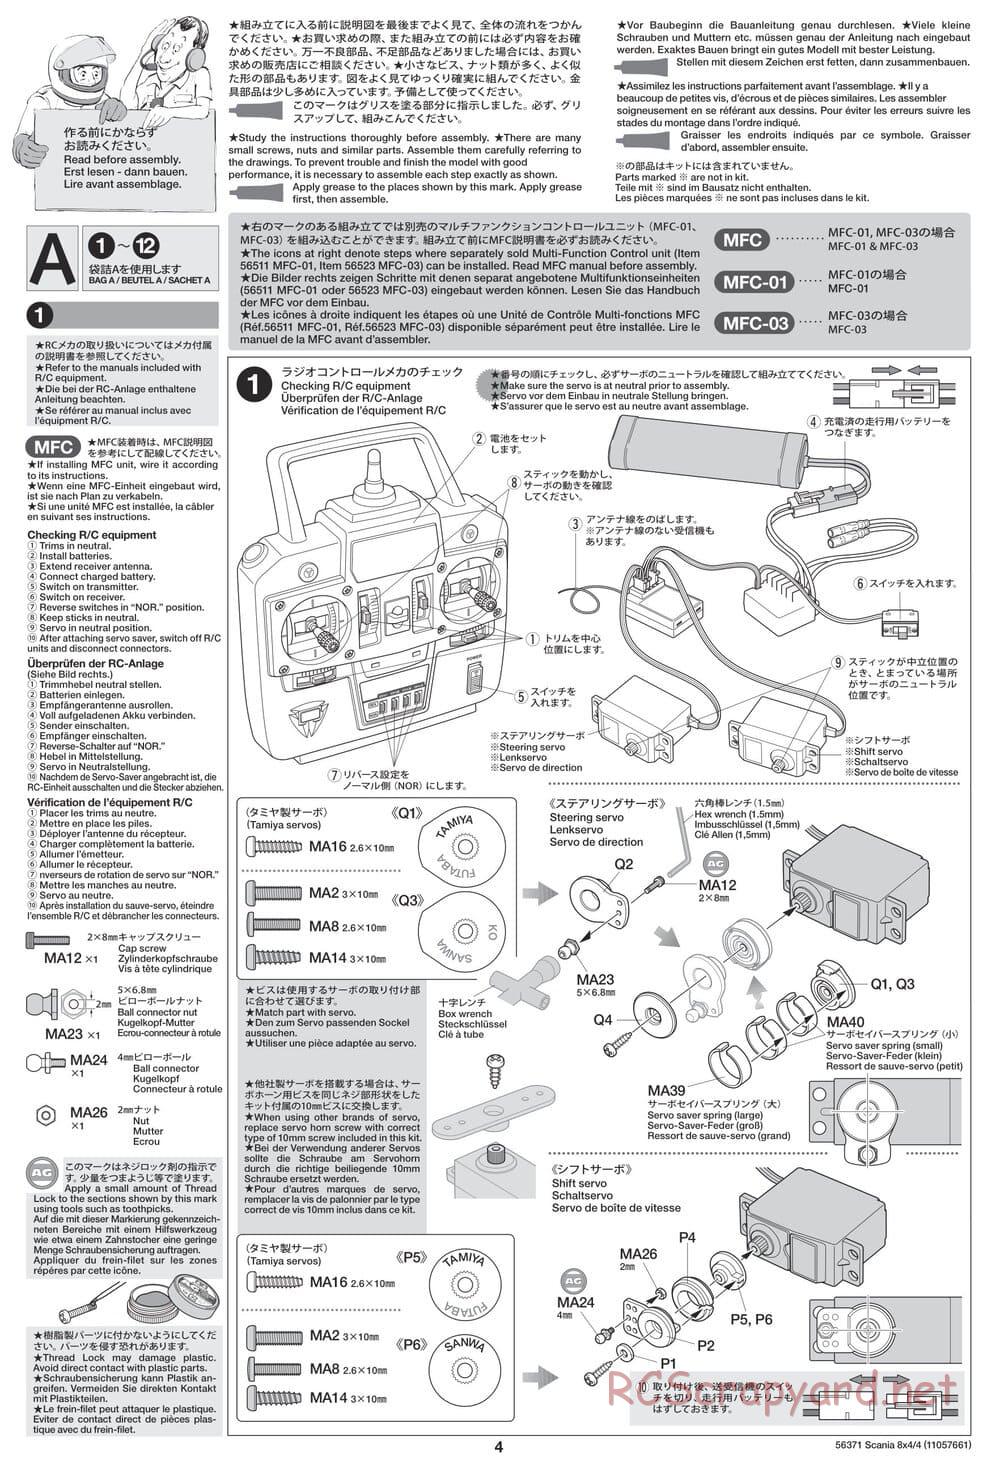 Tamiya - Scania 770 S 8x4/4 Chassis - Manual - Page 4